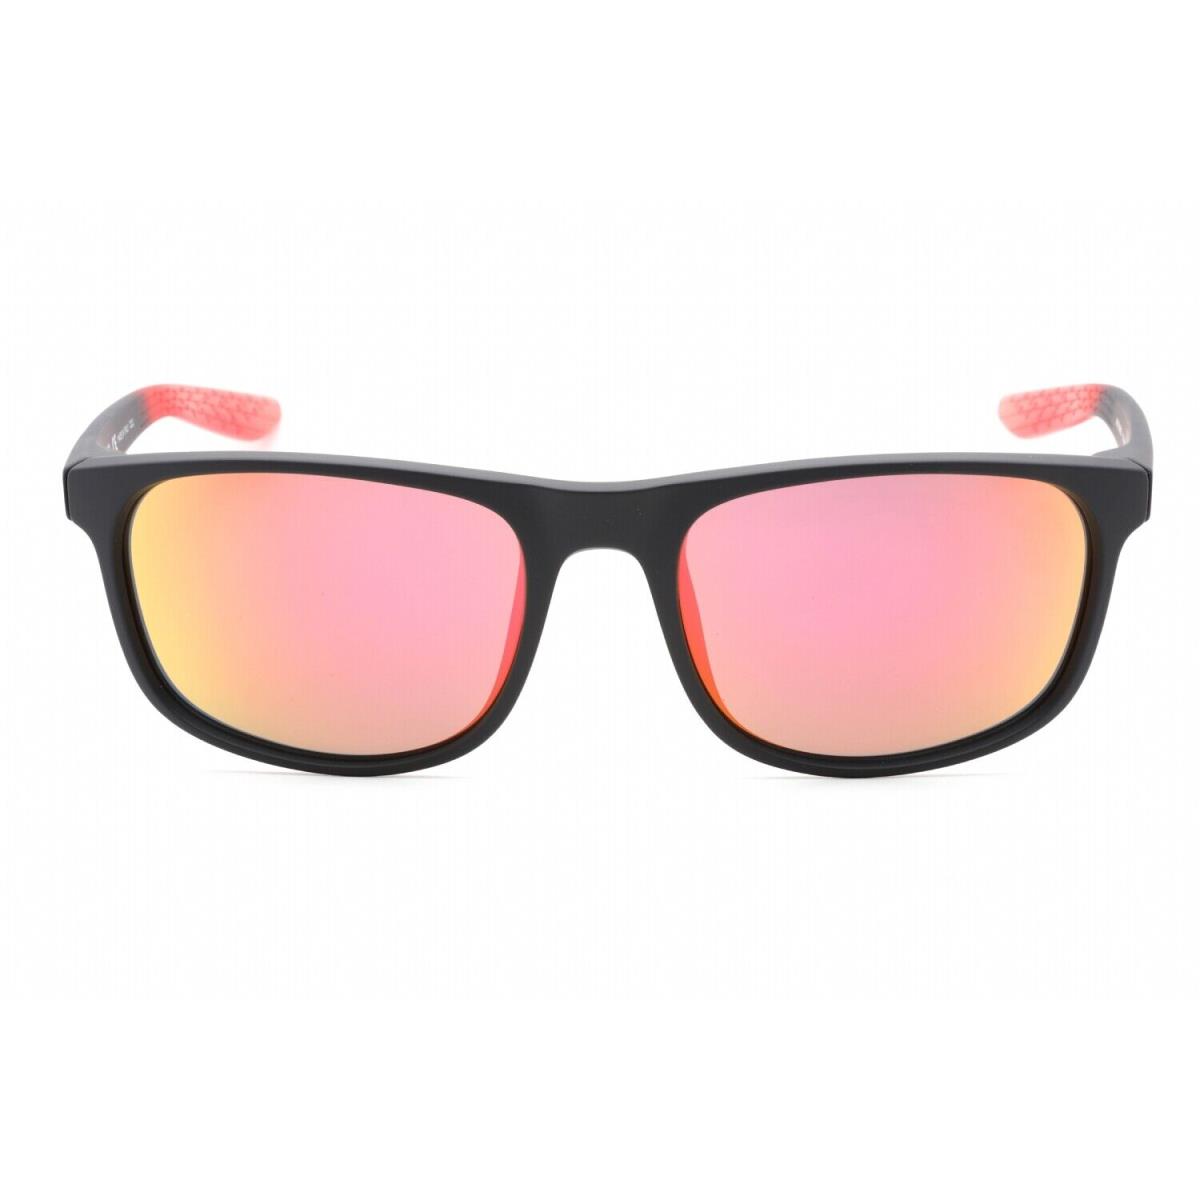 Nike Endure M MI CW4650 015 Sunglasses Matte Gridiron Frame Pink Lenses 59mm